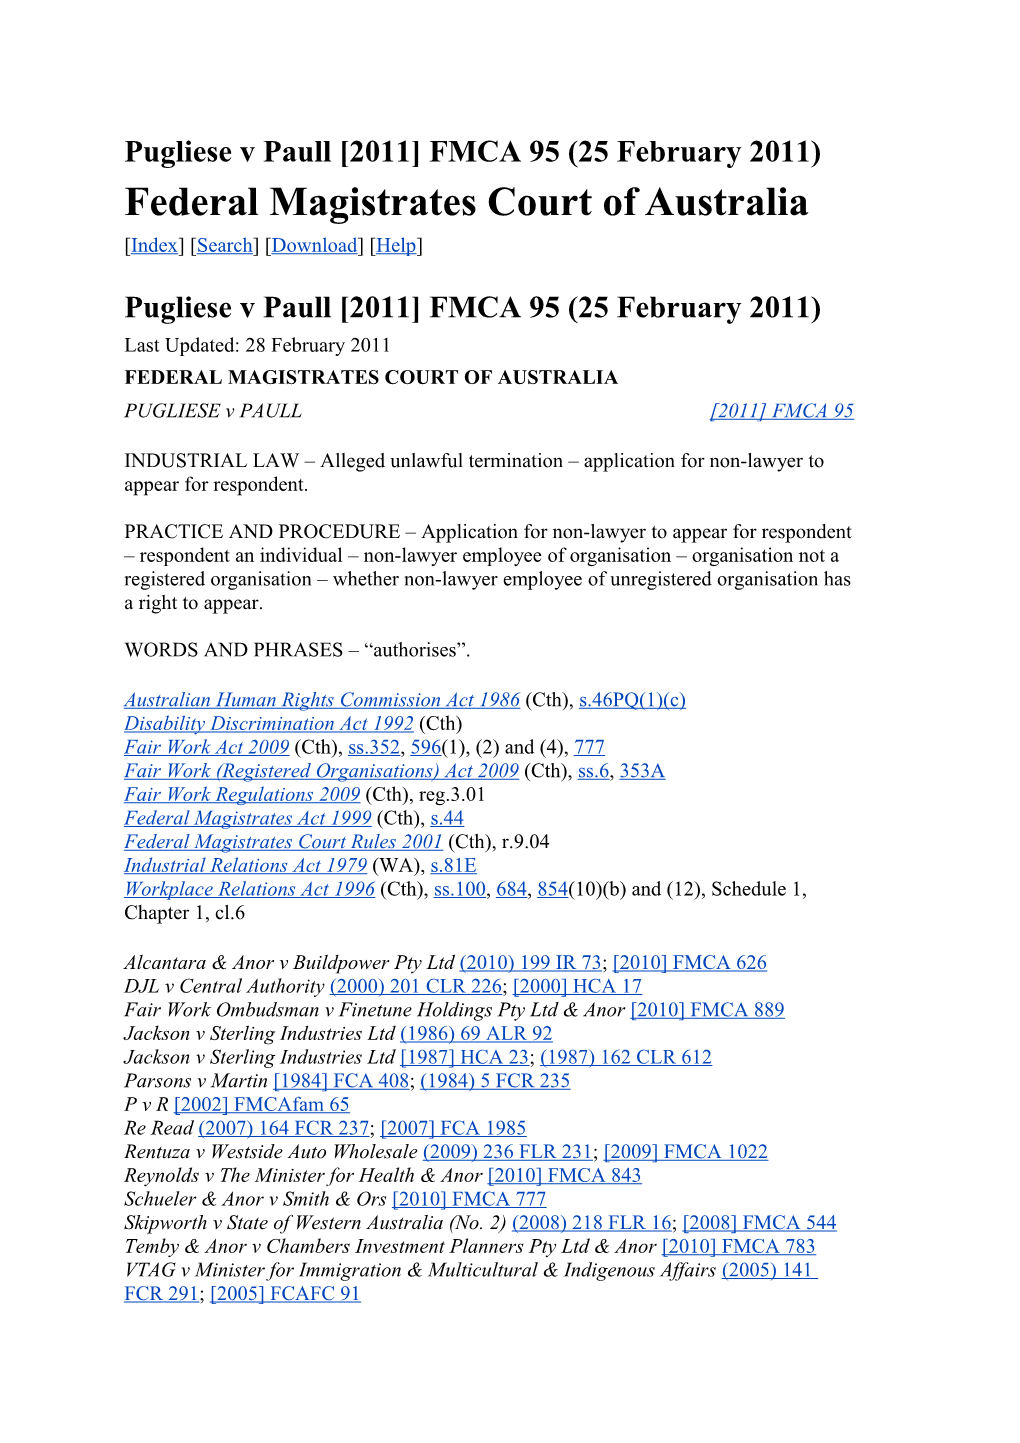 Pugliese V Paull 2011 FMCA 95 (25 February 2011)